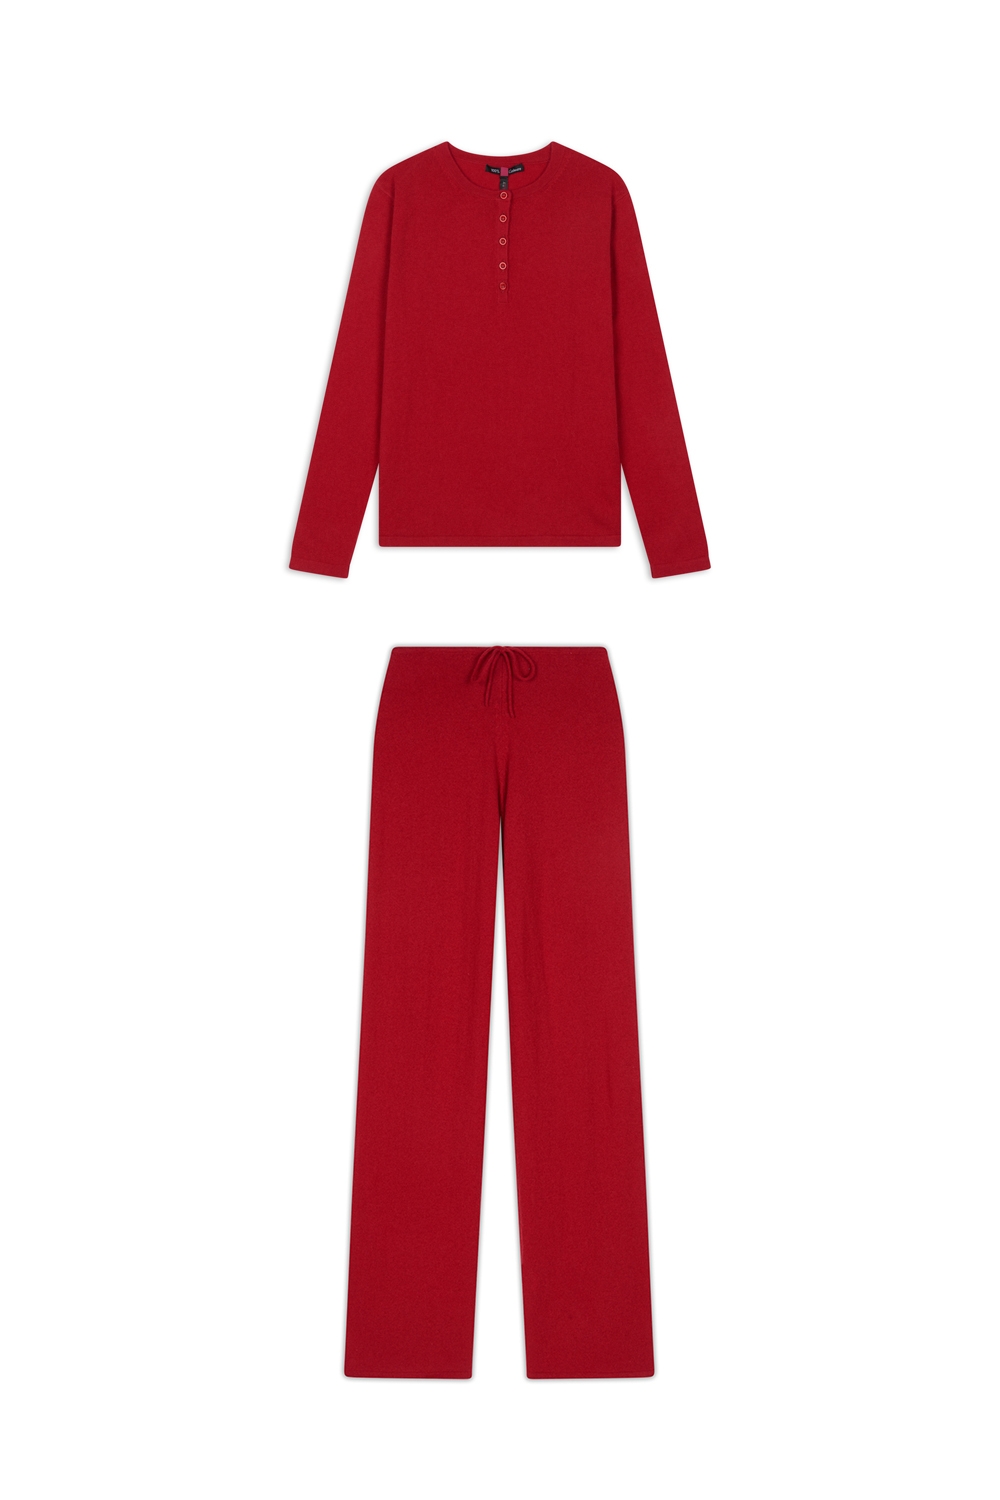 Cashmere ladies pyjamas loan blood red 3xl